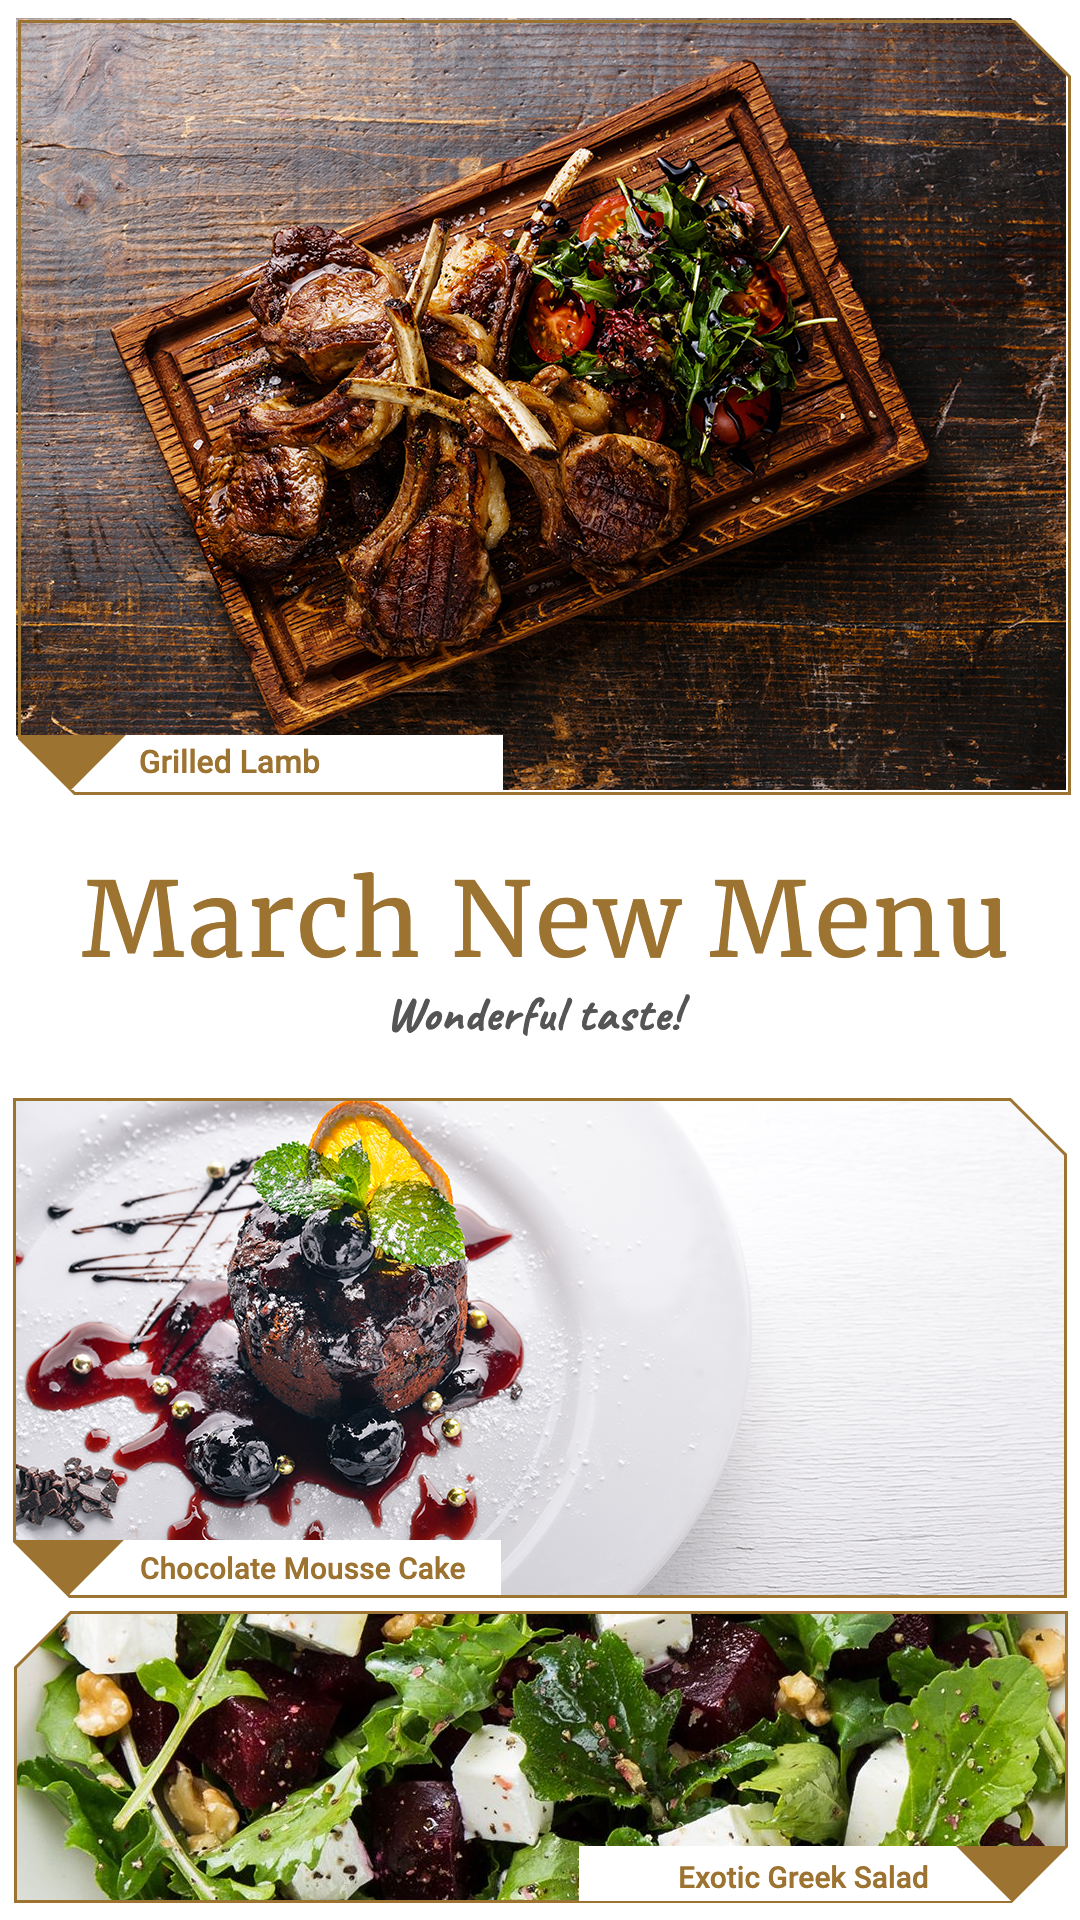 March New Menu Restaurant Ecommerce Story预览效果